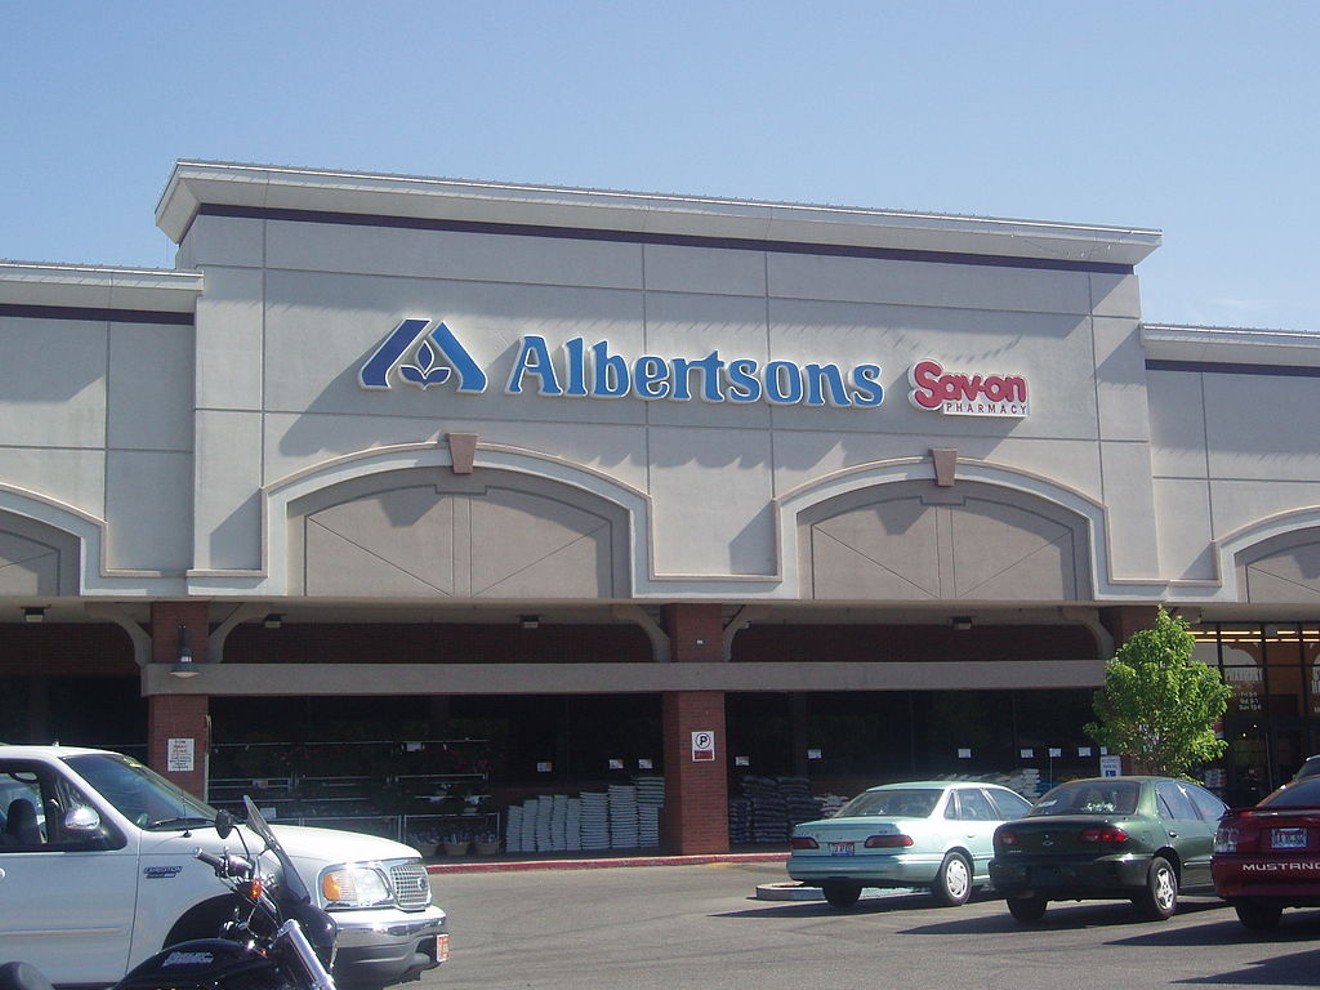 An Albertsons store